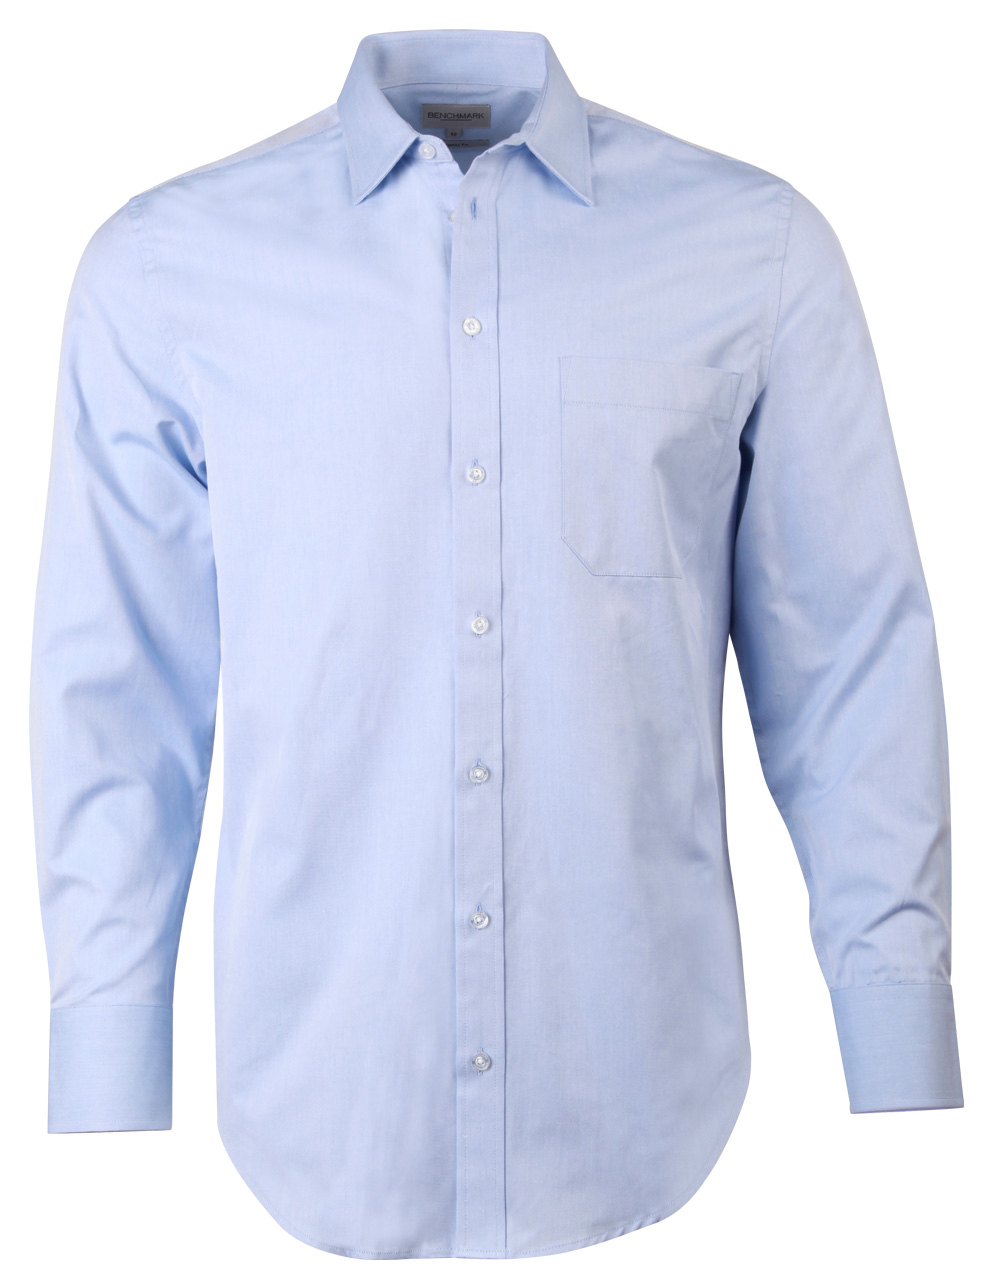 M7005L Men’s Pinpoint Oxford Long Sleeve Shirt